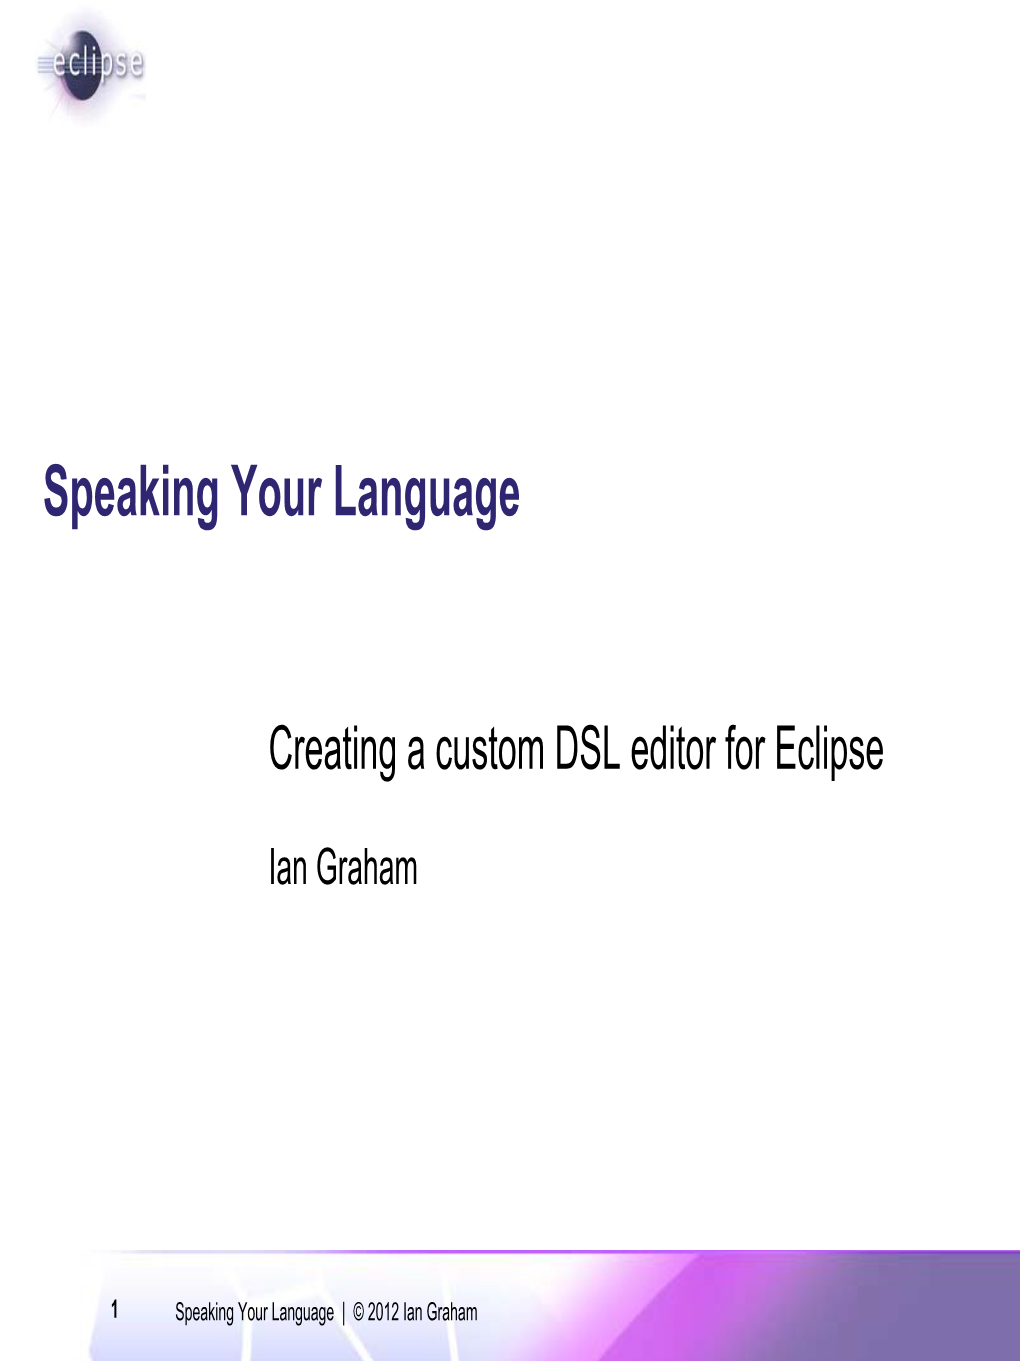 Creating Custom DSL Editor for Eclipse Ian Graham Markit Risk Analytics